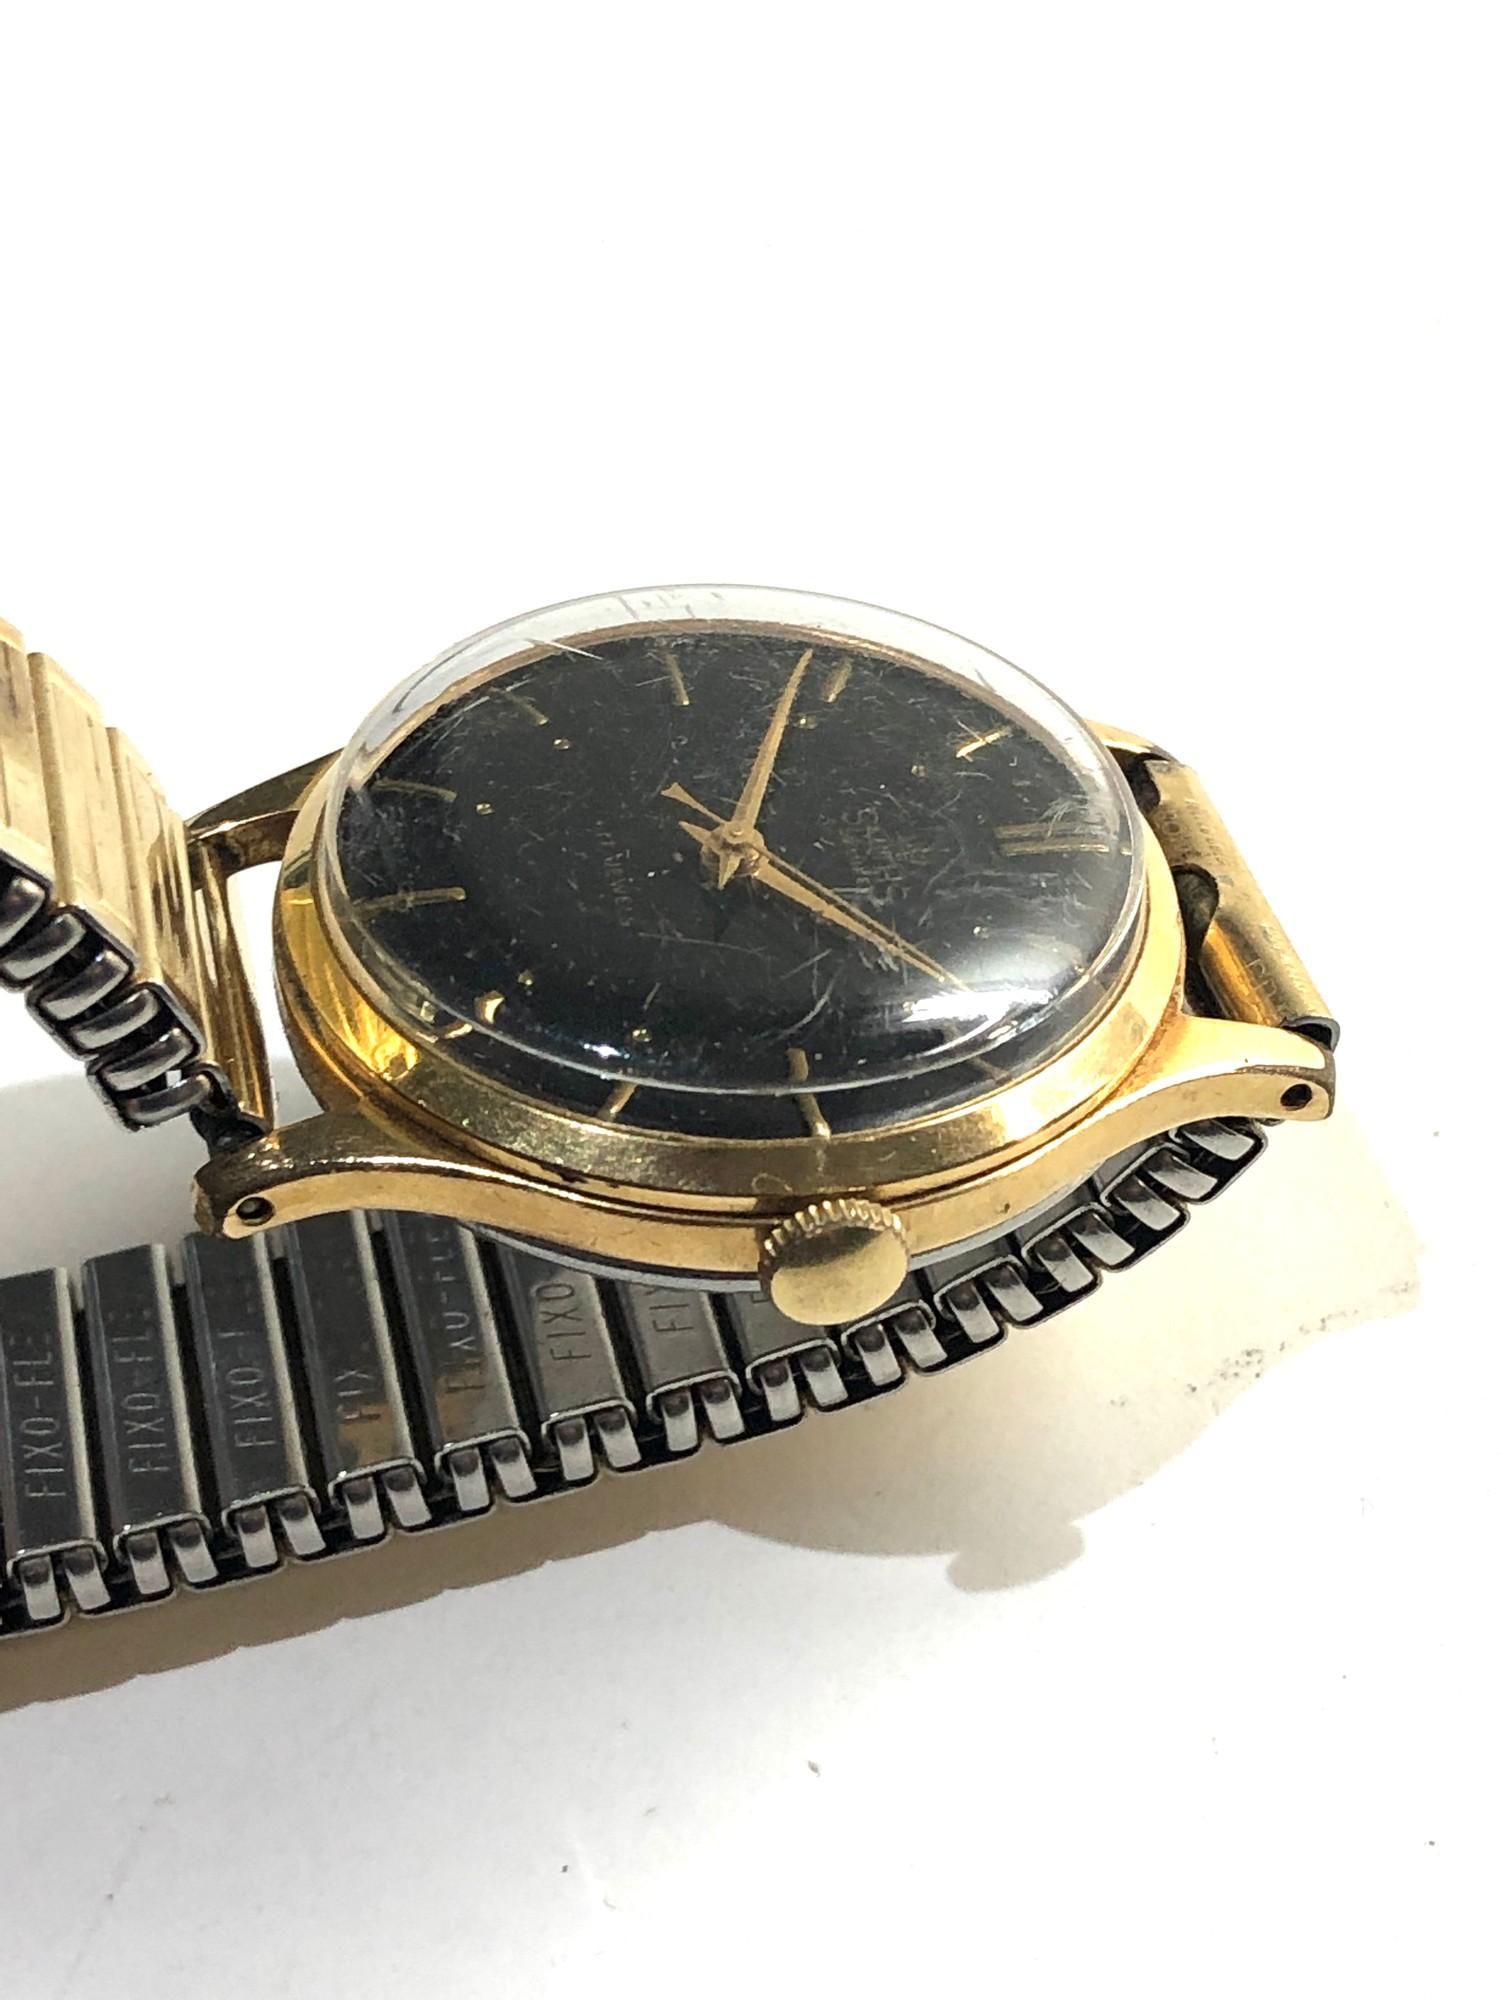 Vintage black dial smiths de luxe 17 jewel gents wrist watch winds and ticks but no warranty given - Bild 3 aus 4